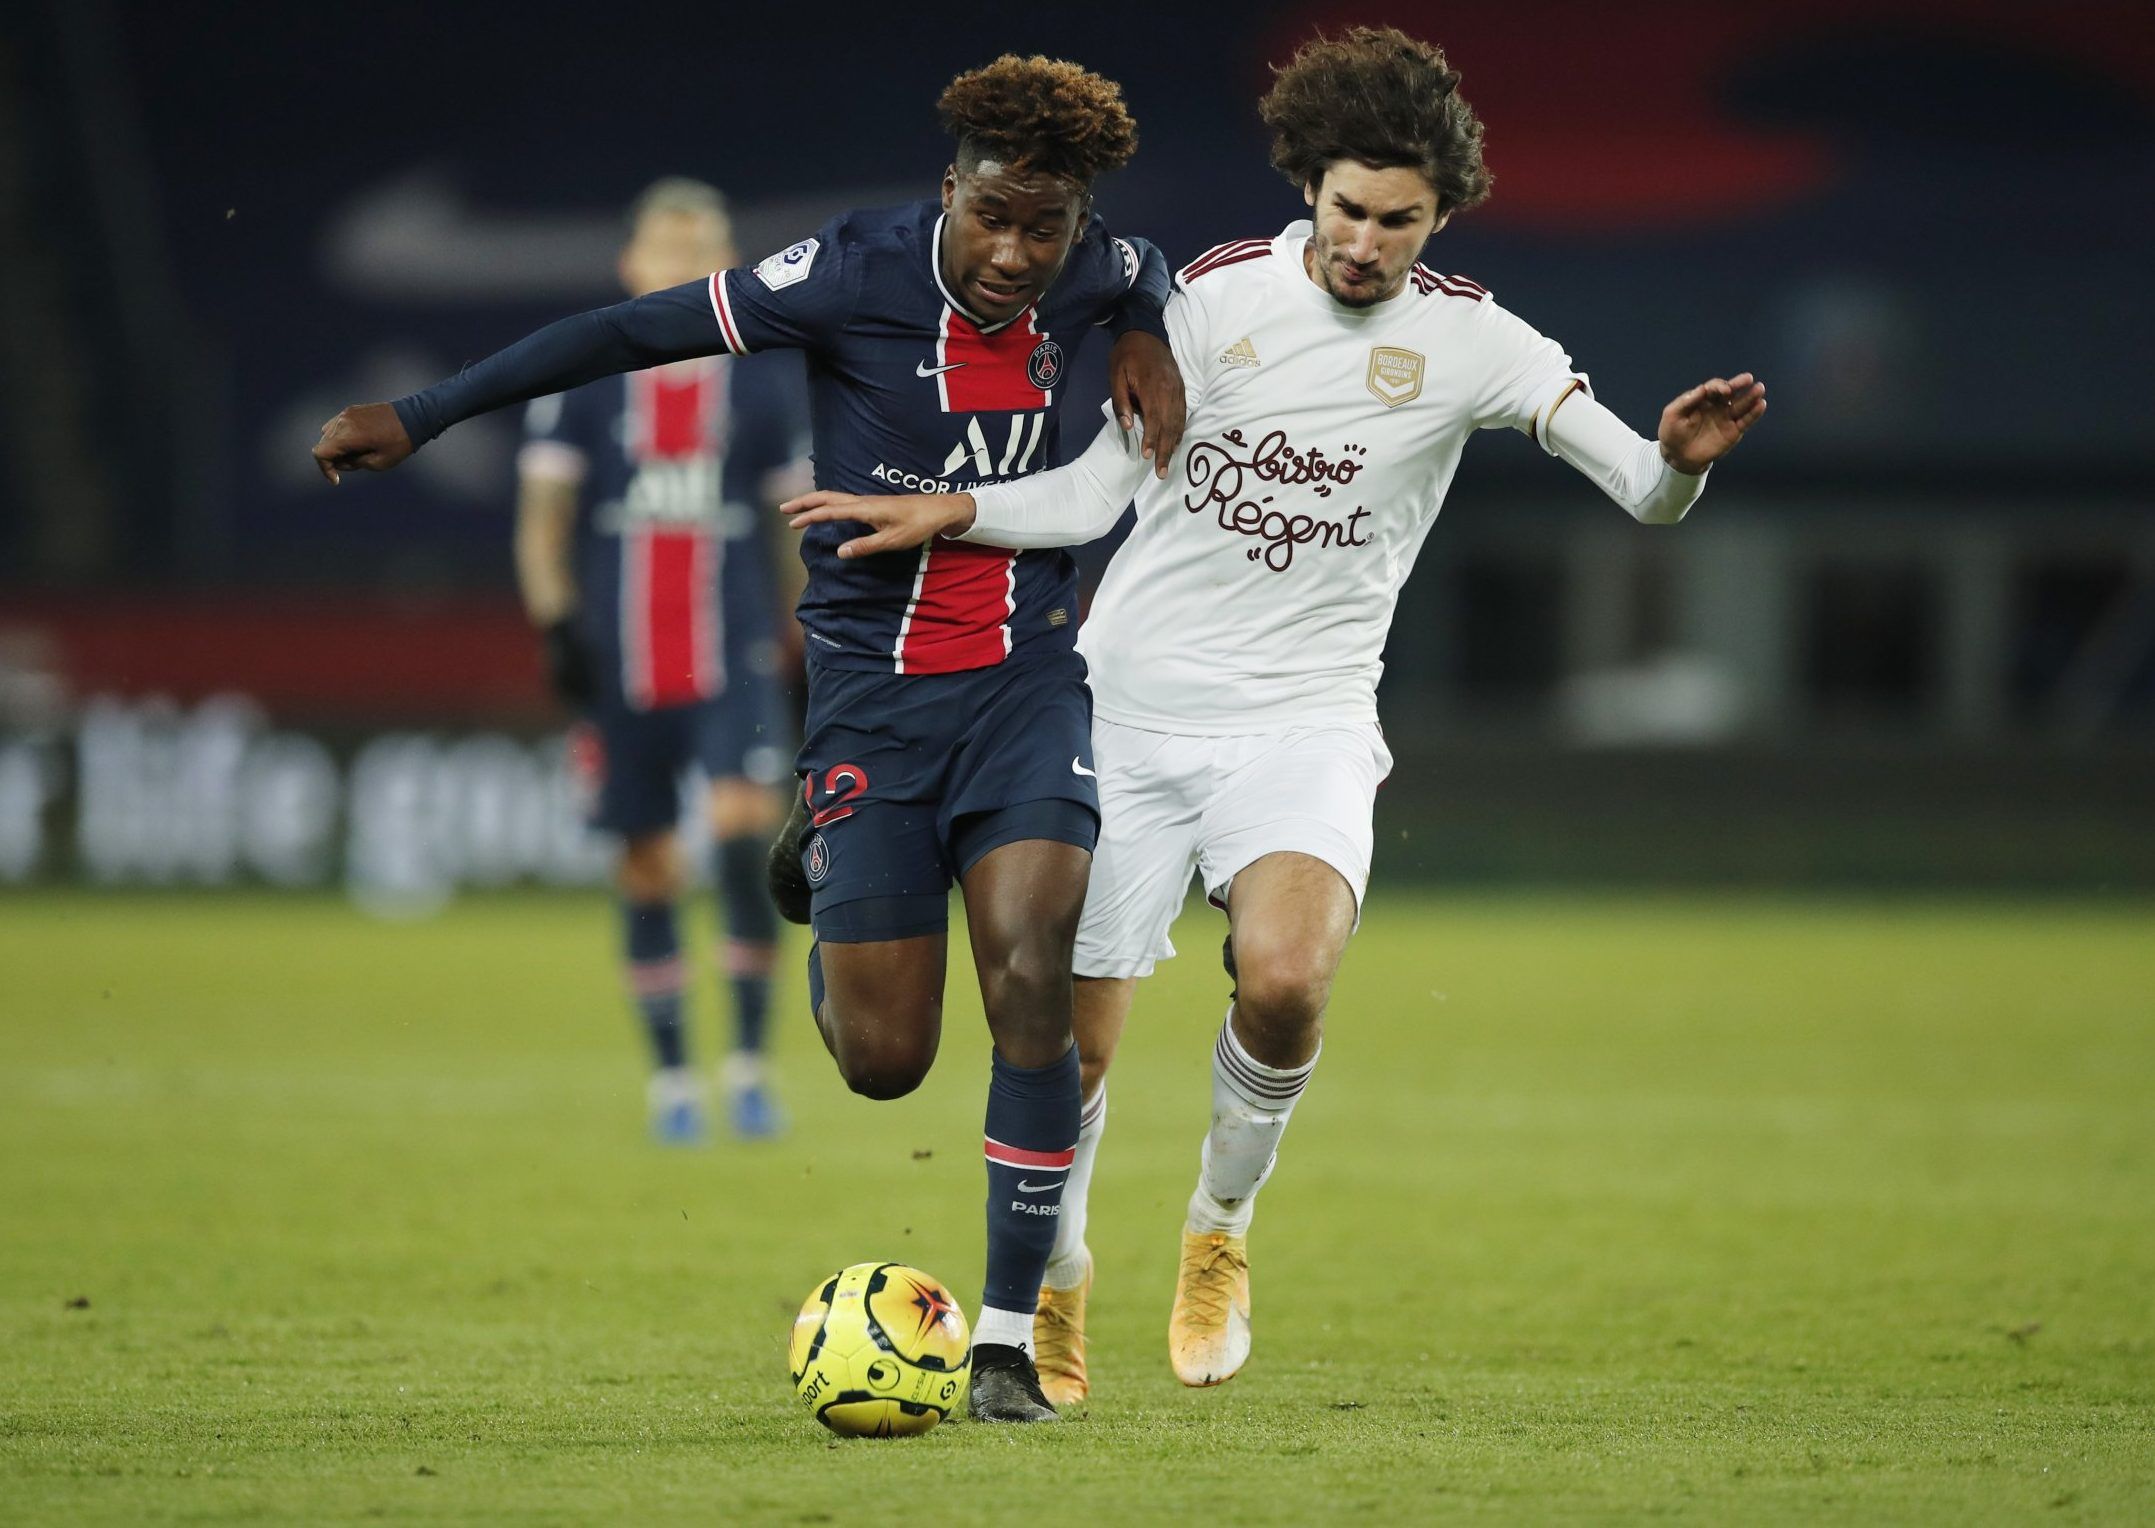 bordeaux midfielder yacine adli in action against psg ligue 1